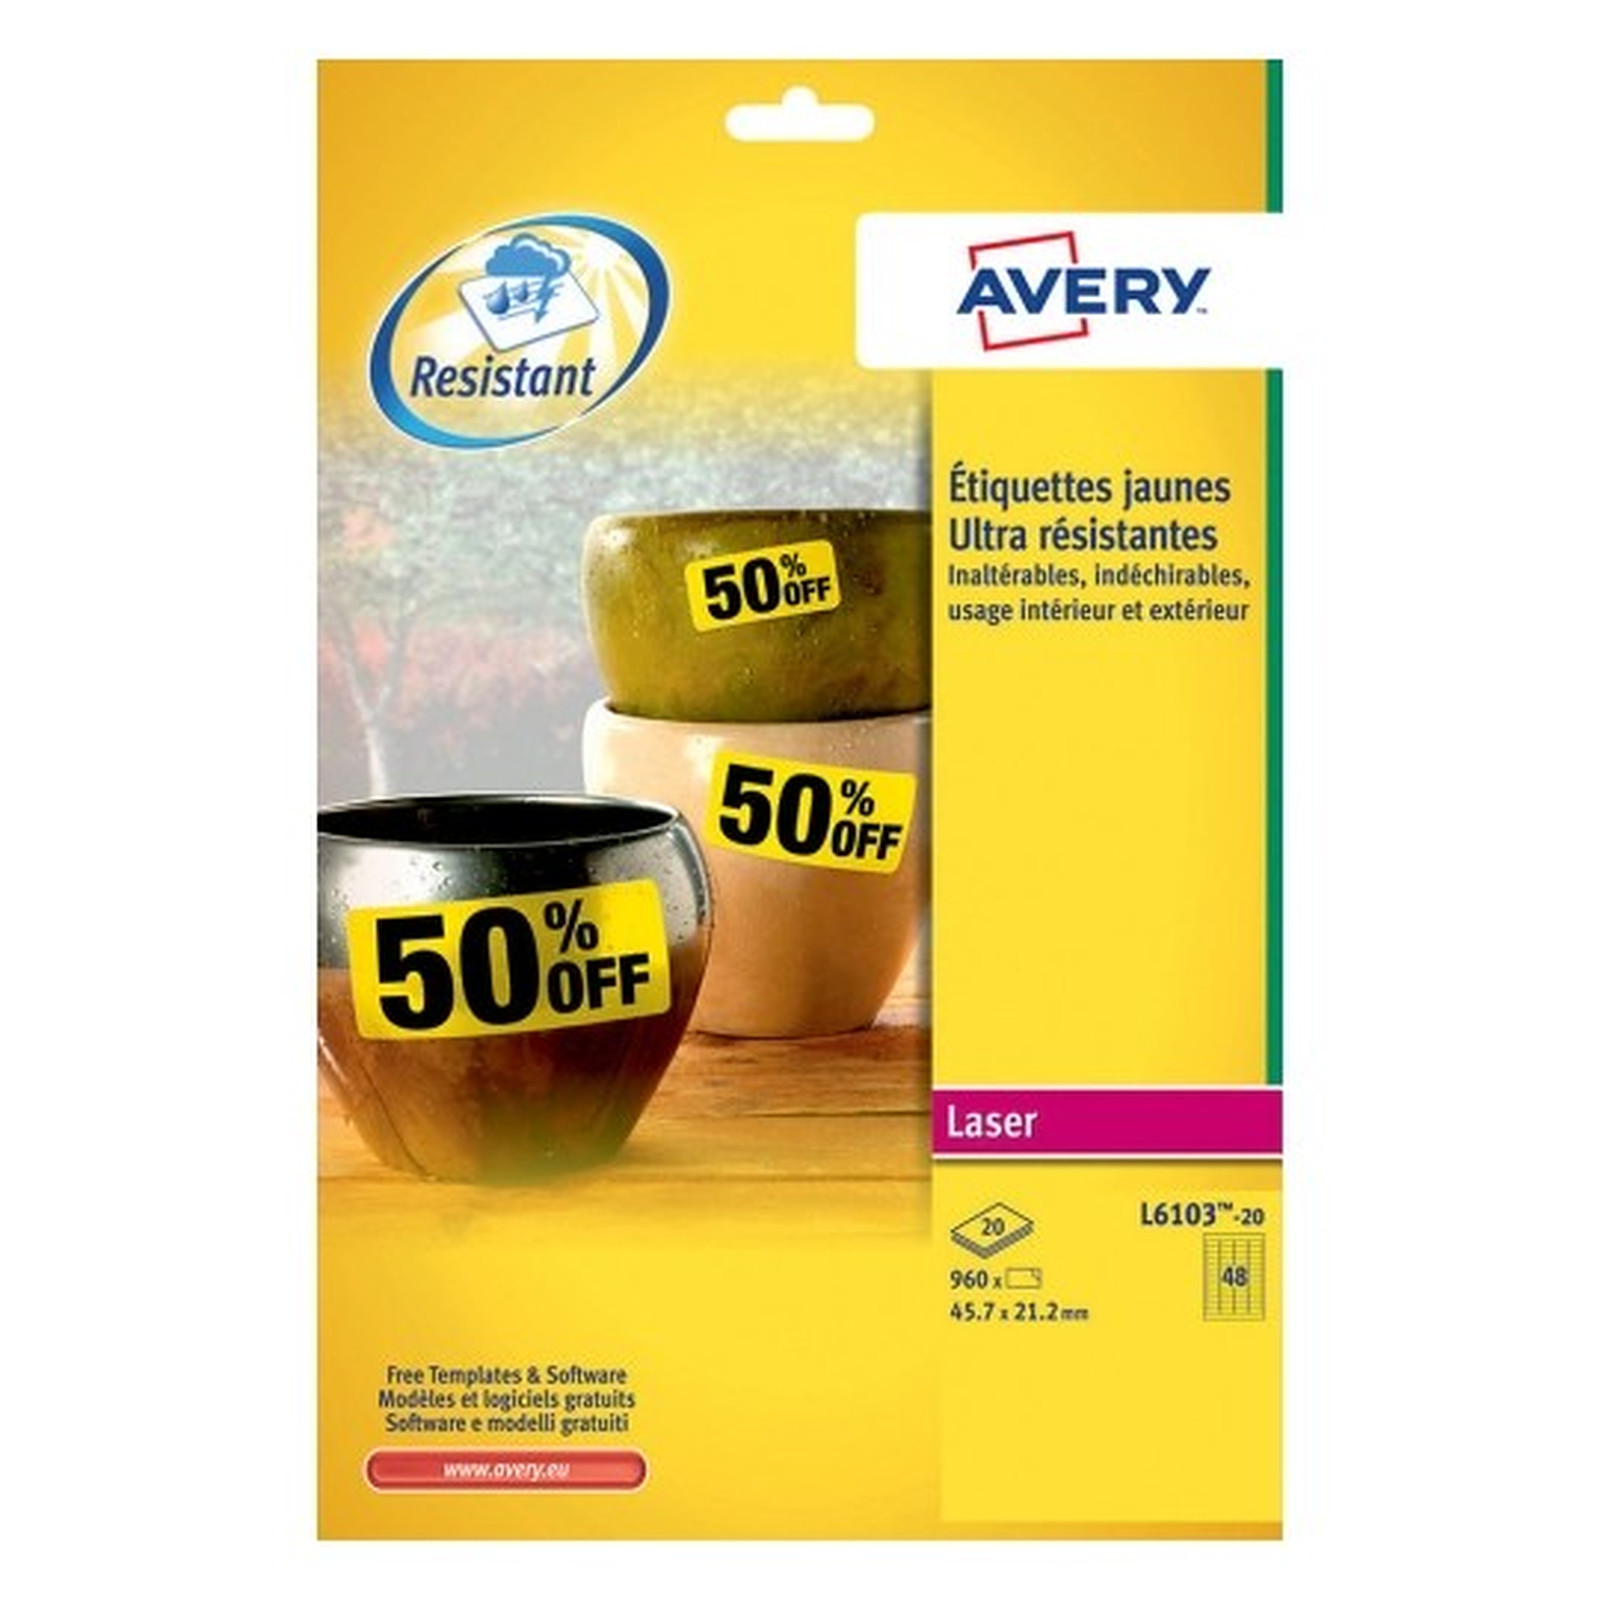 Avery Etiquettes ultra-resistante jaune 21,2 x 45,7 mm - Etiquette Avery